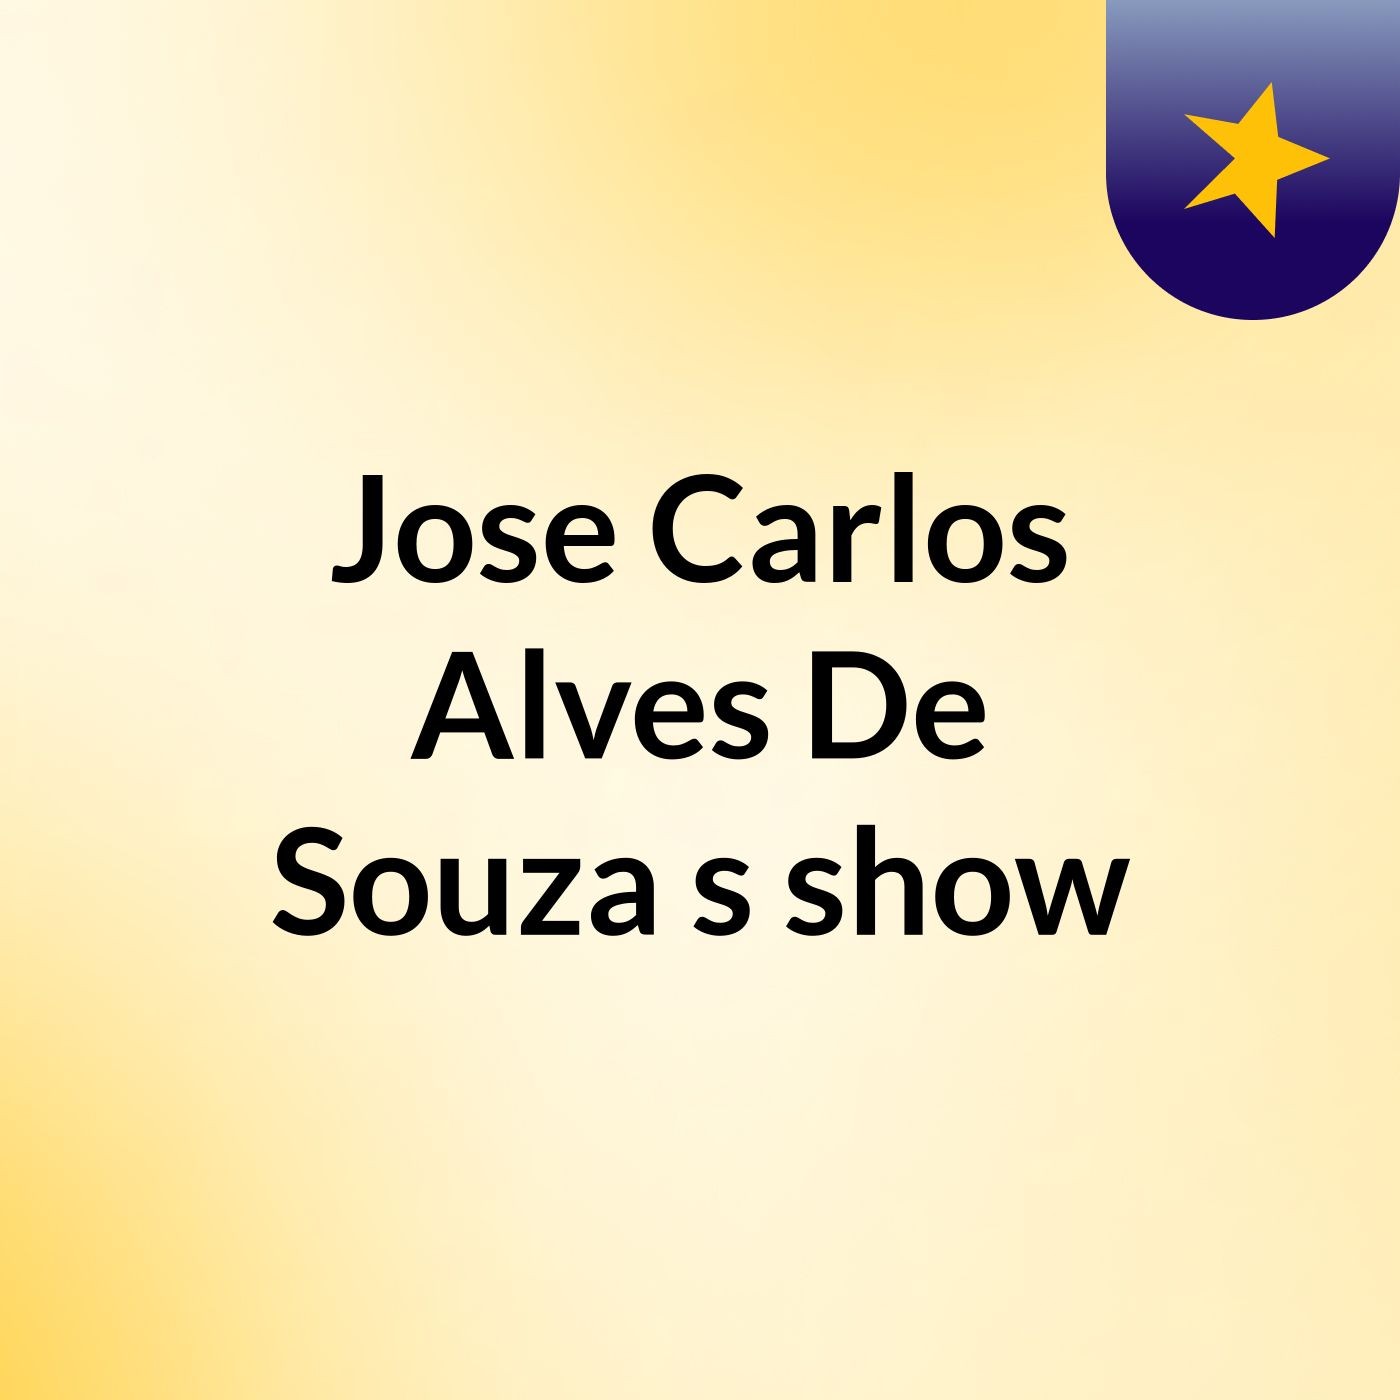 Jose Carlos Alves De Souza's show